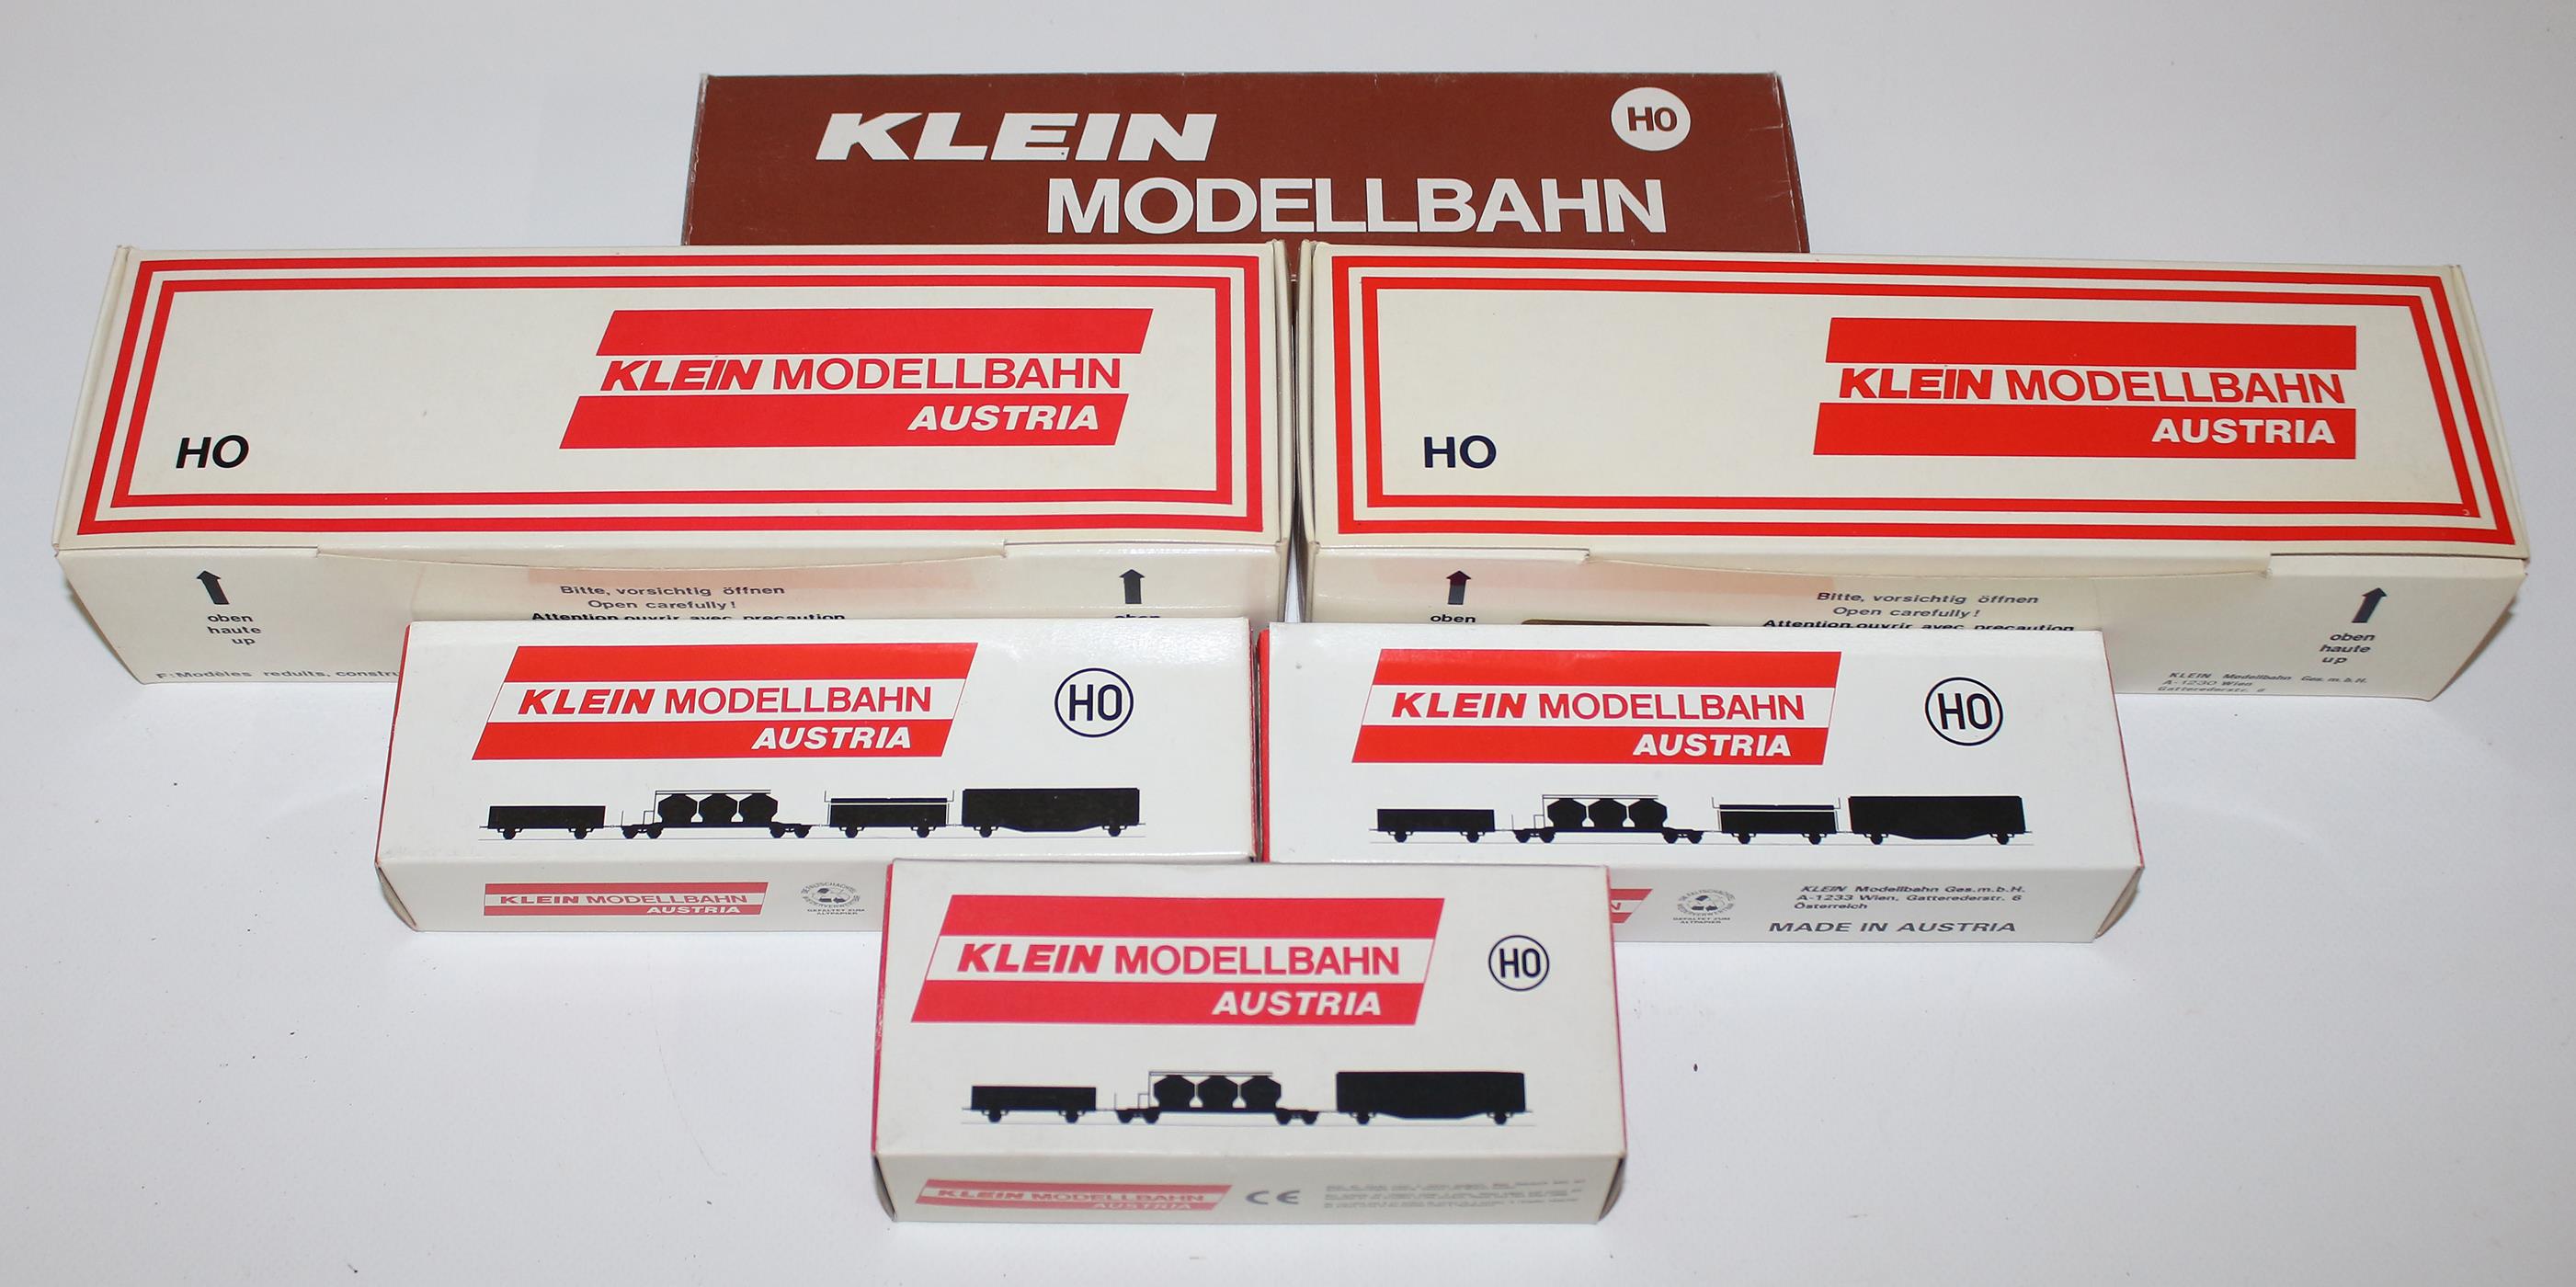 Klein Modellbahn Austria Slg. | Bild Nr.3